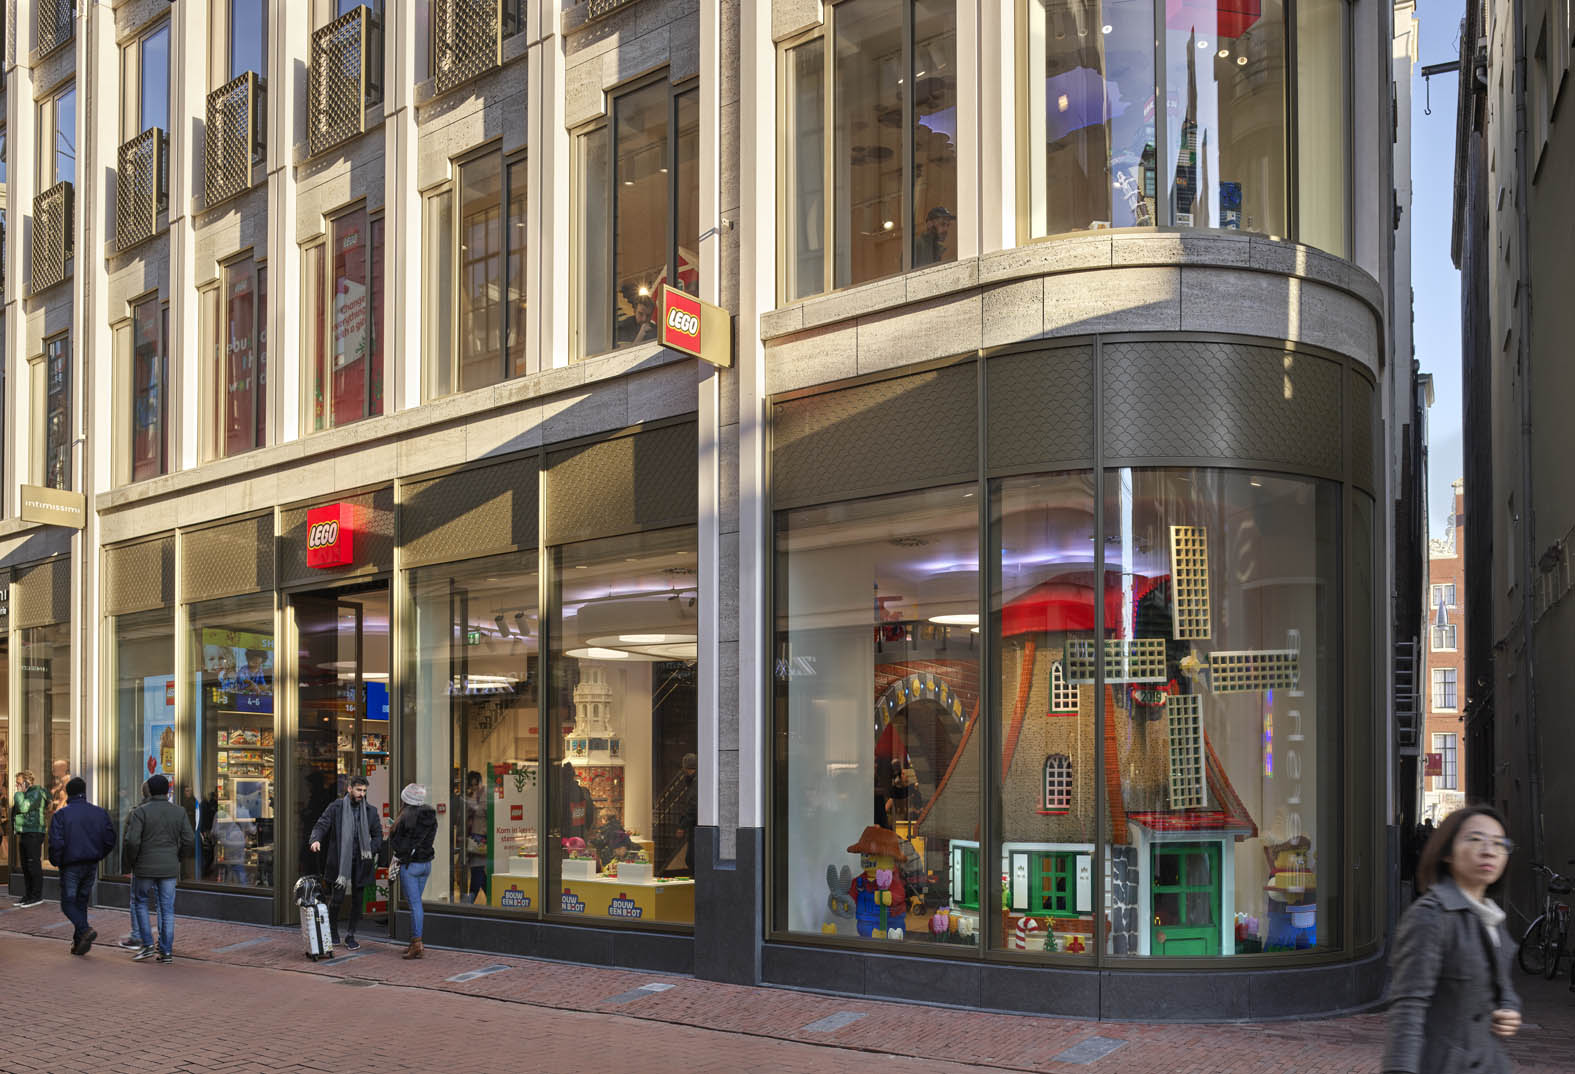 LEGO Kalverstraat ASR Dutch Prime Retail Fund